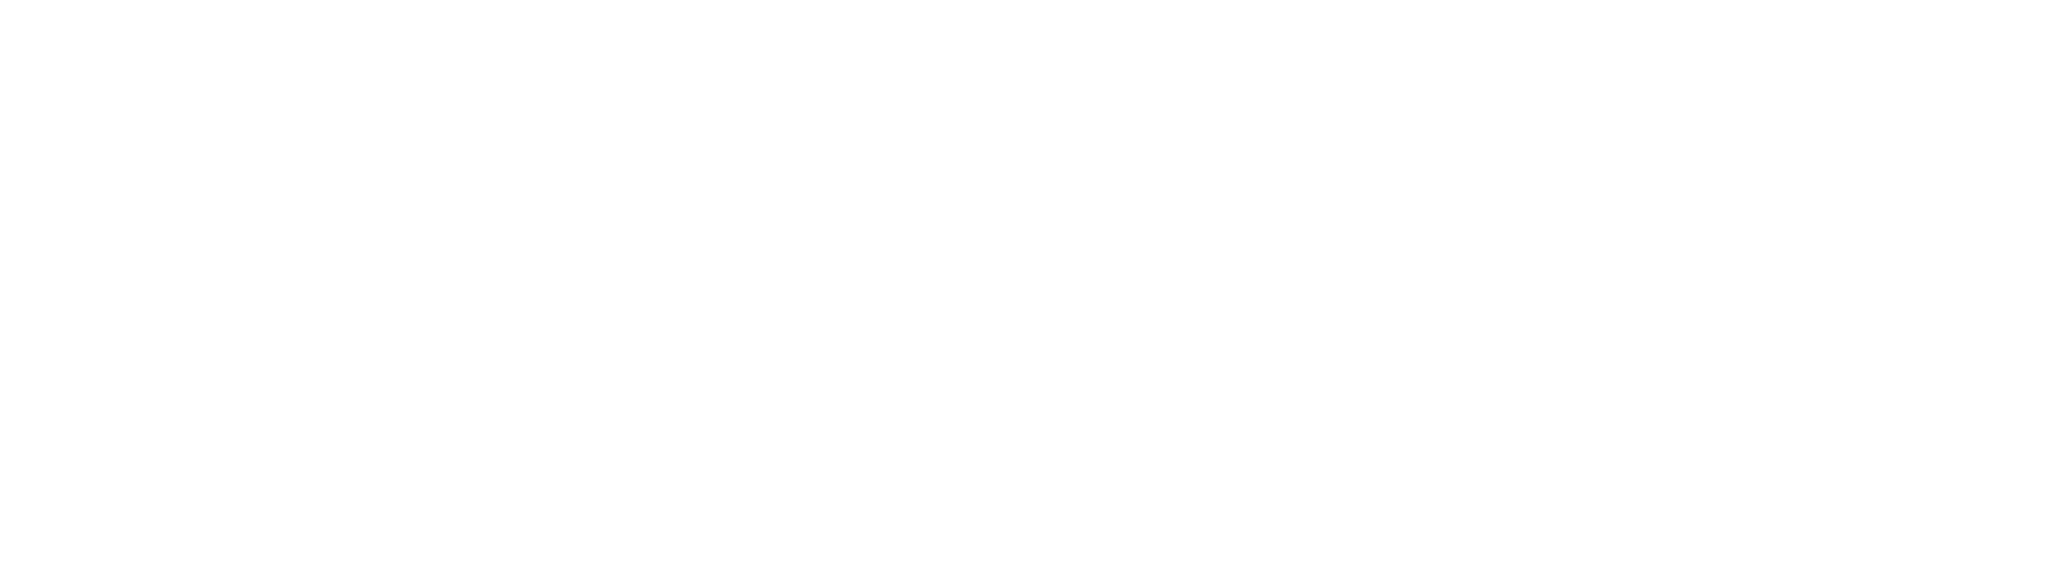 Yotpo-logo.svg_-2048x580